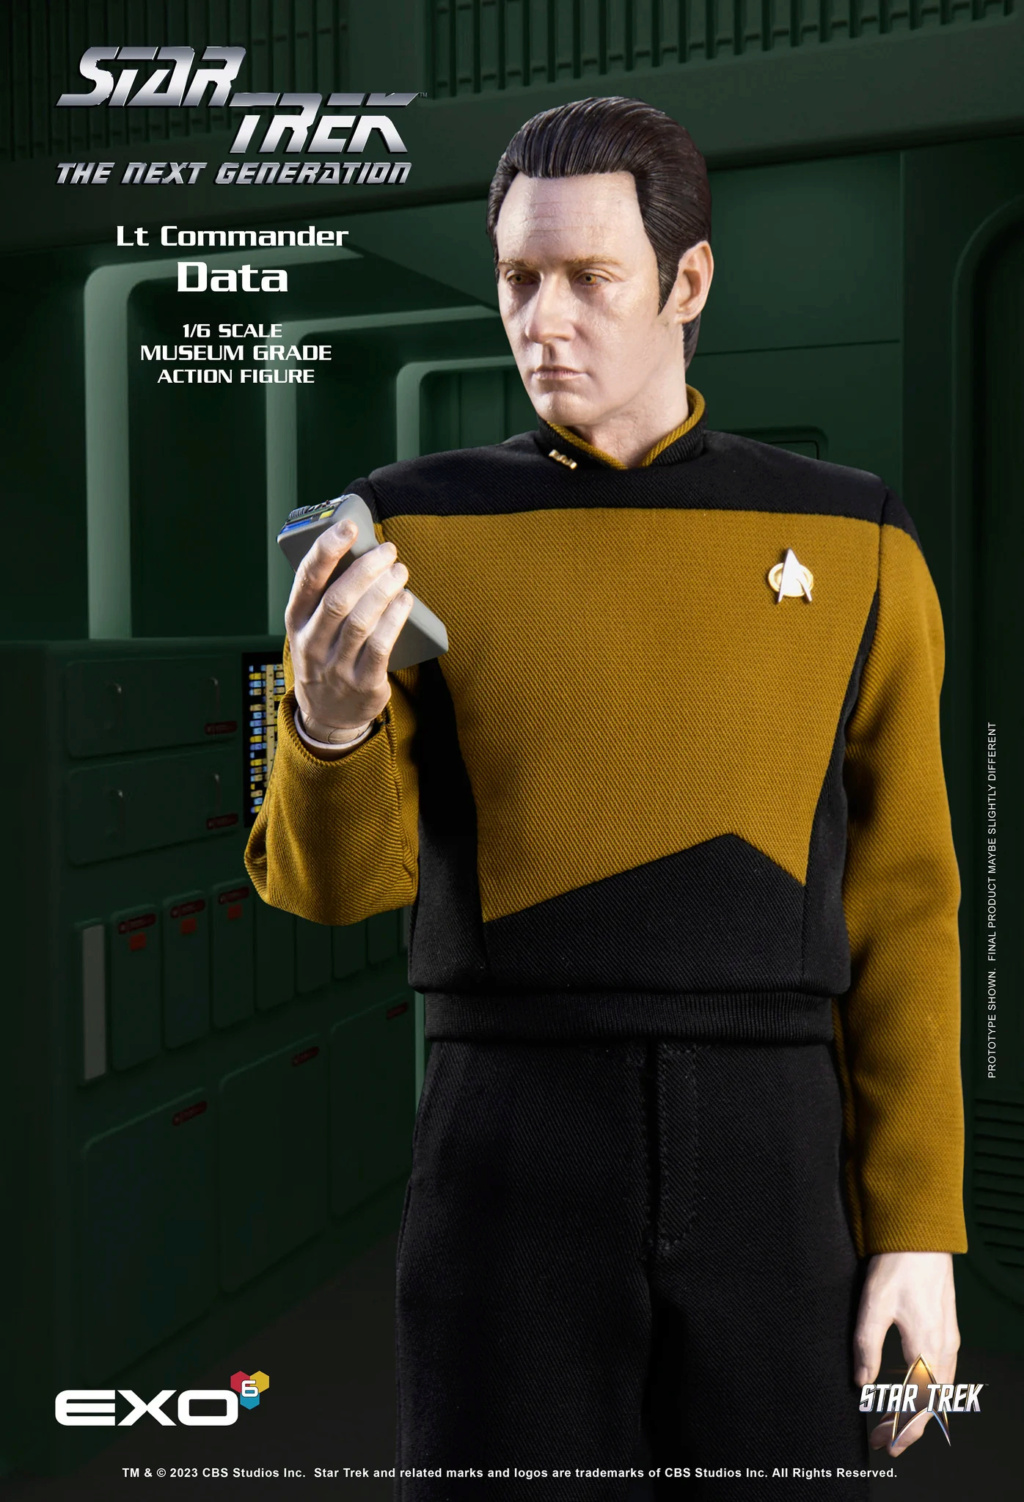 Exo-6 : Star Trek The Next Generation - Lieutenant Commander Data 1/6 Scale Data0910